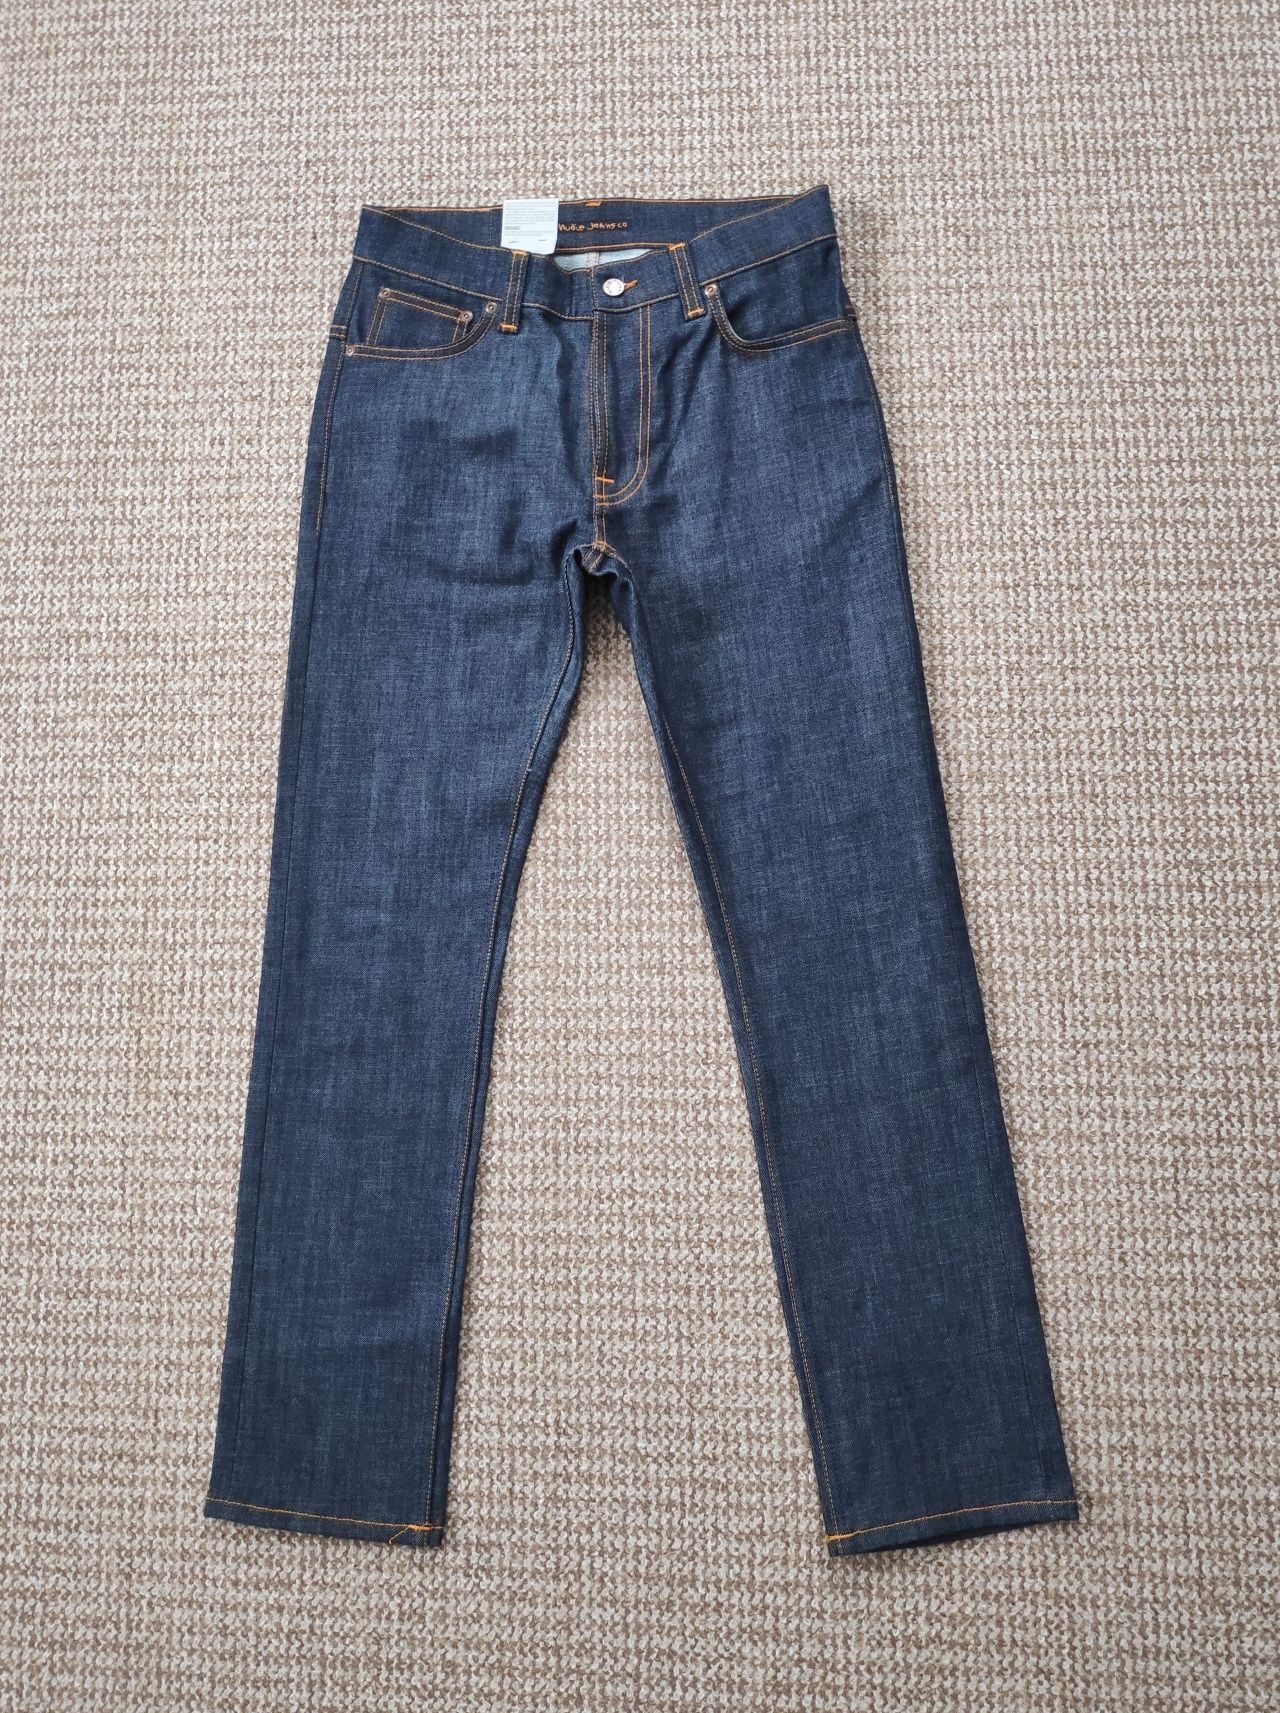 Nudie Jeans Thin Finn джинсы slim fit оригинал W30 L30 новые